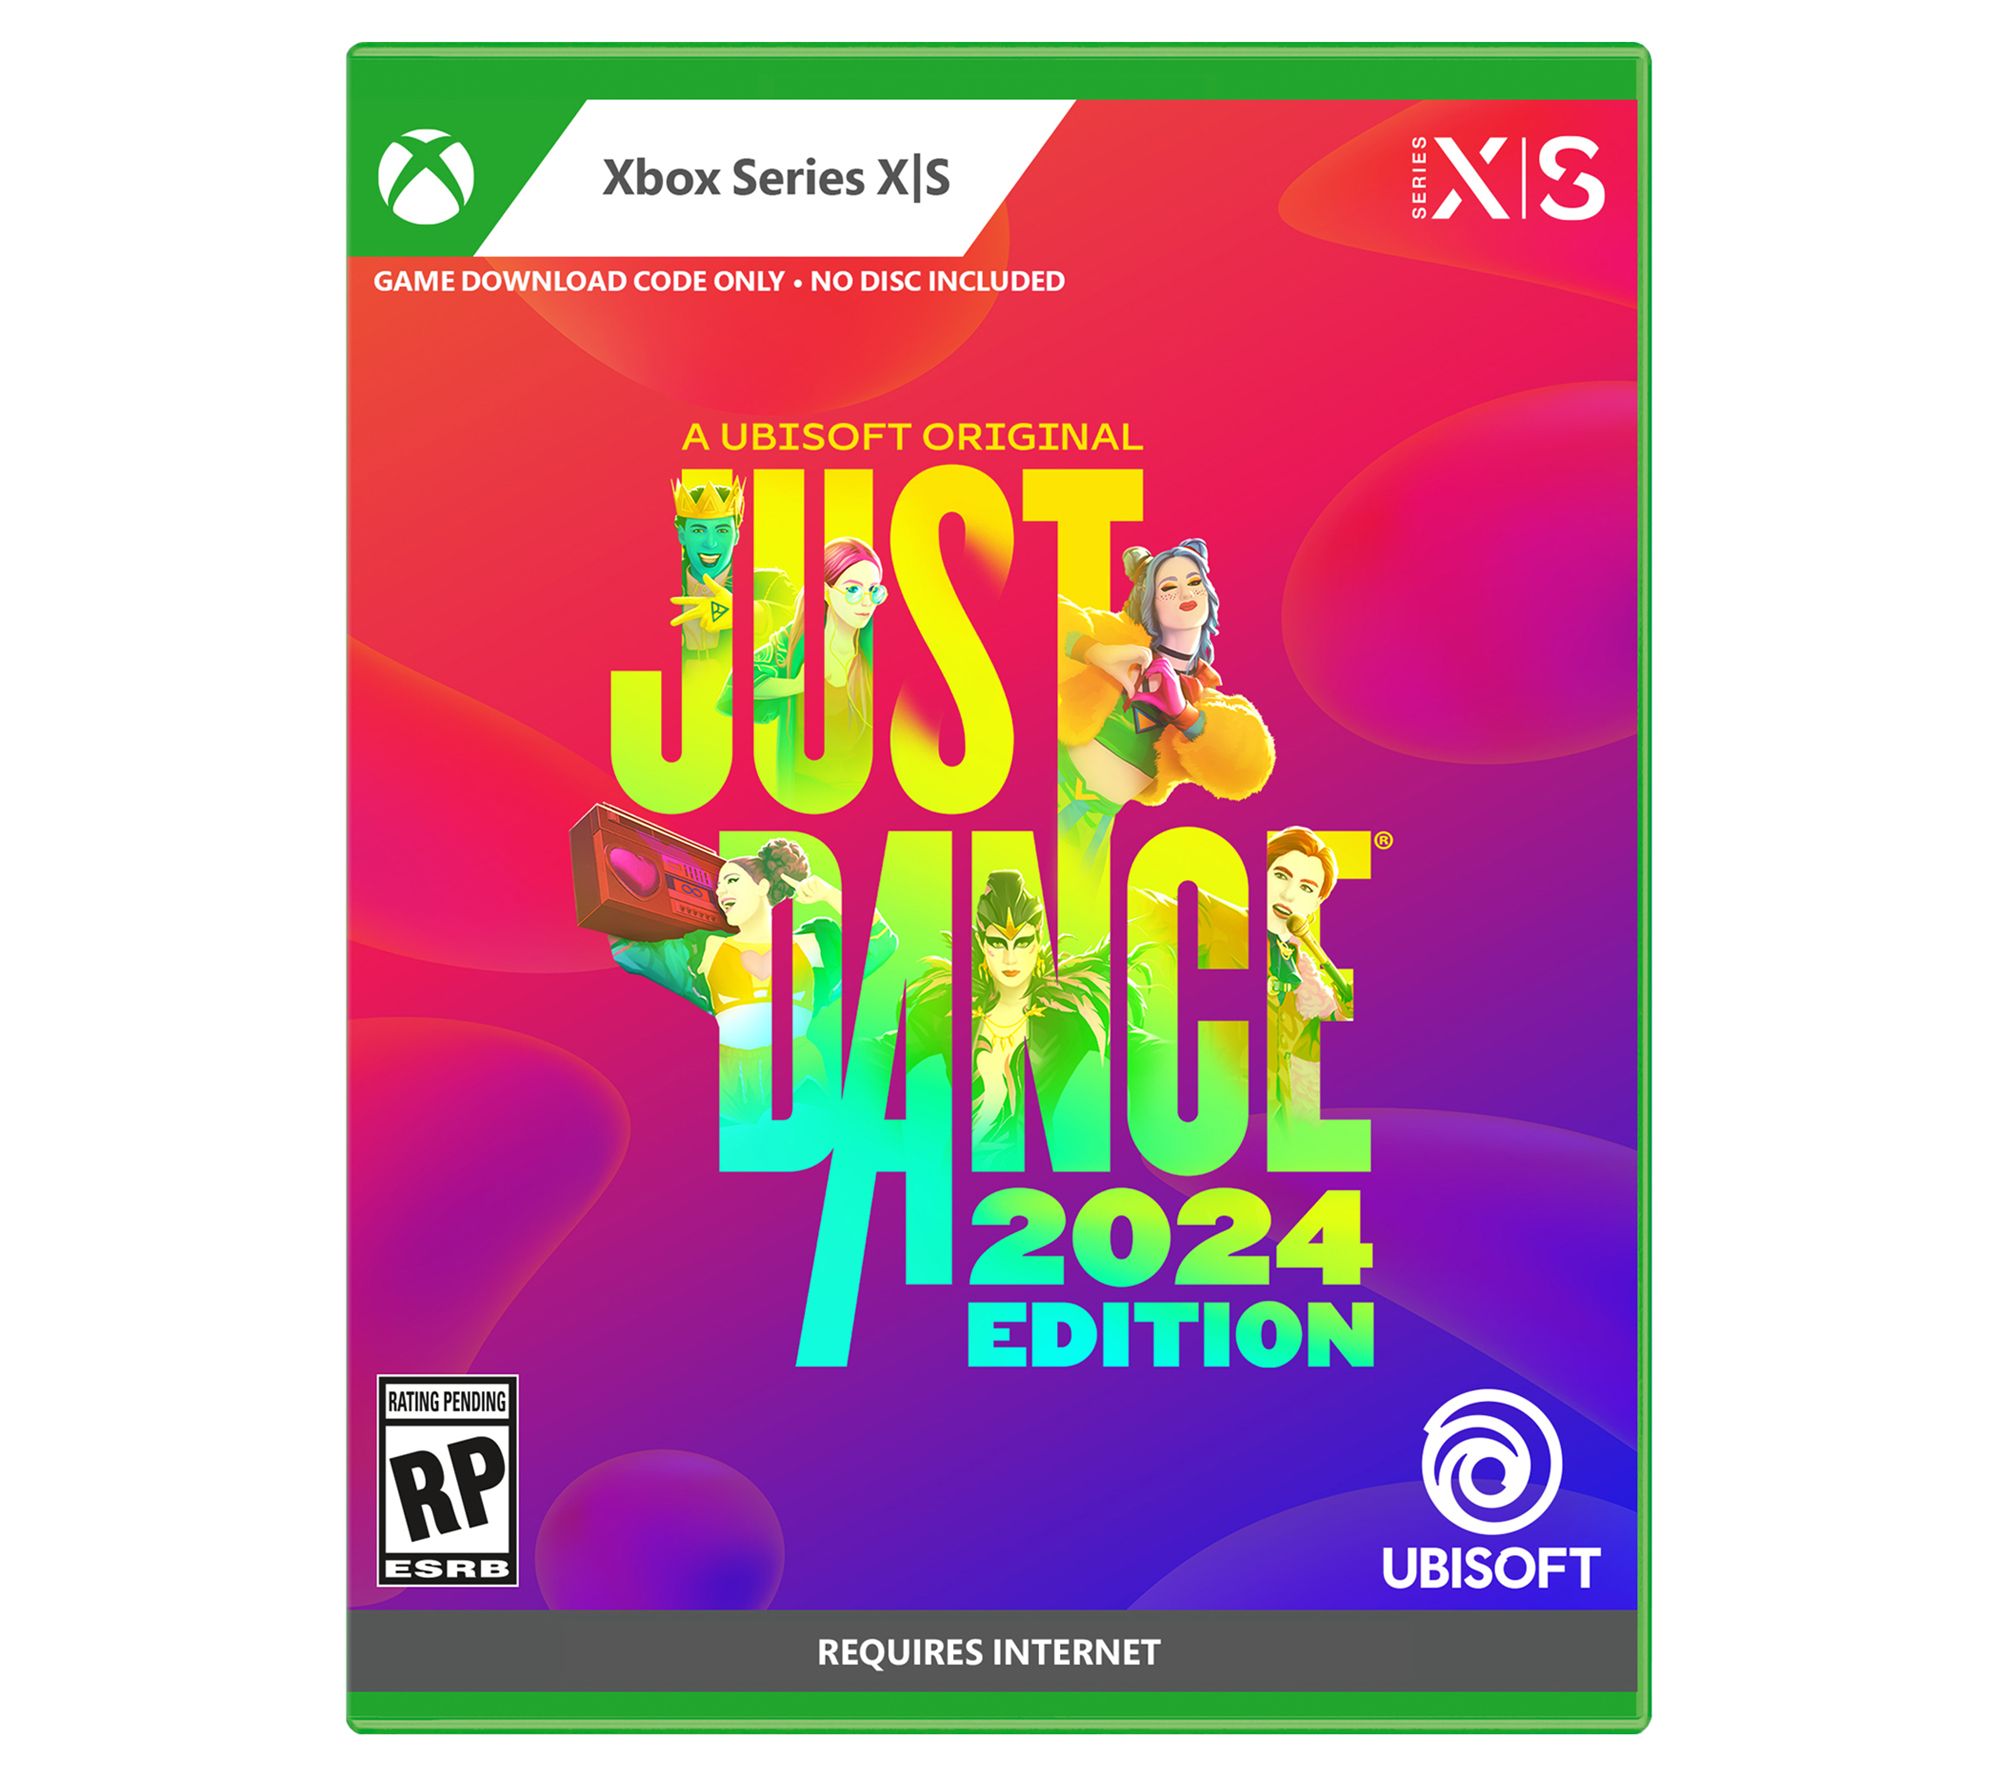 Just Dance 2021 - Playstation 4 : Target